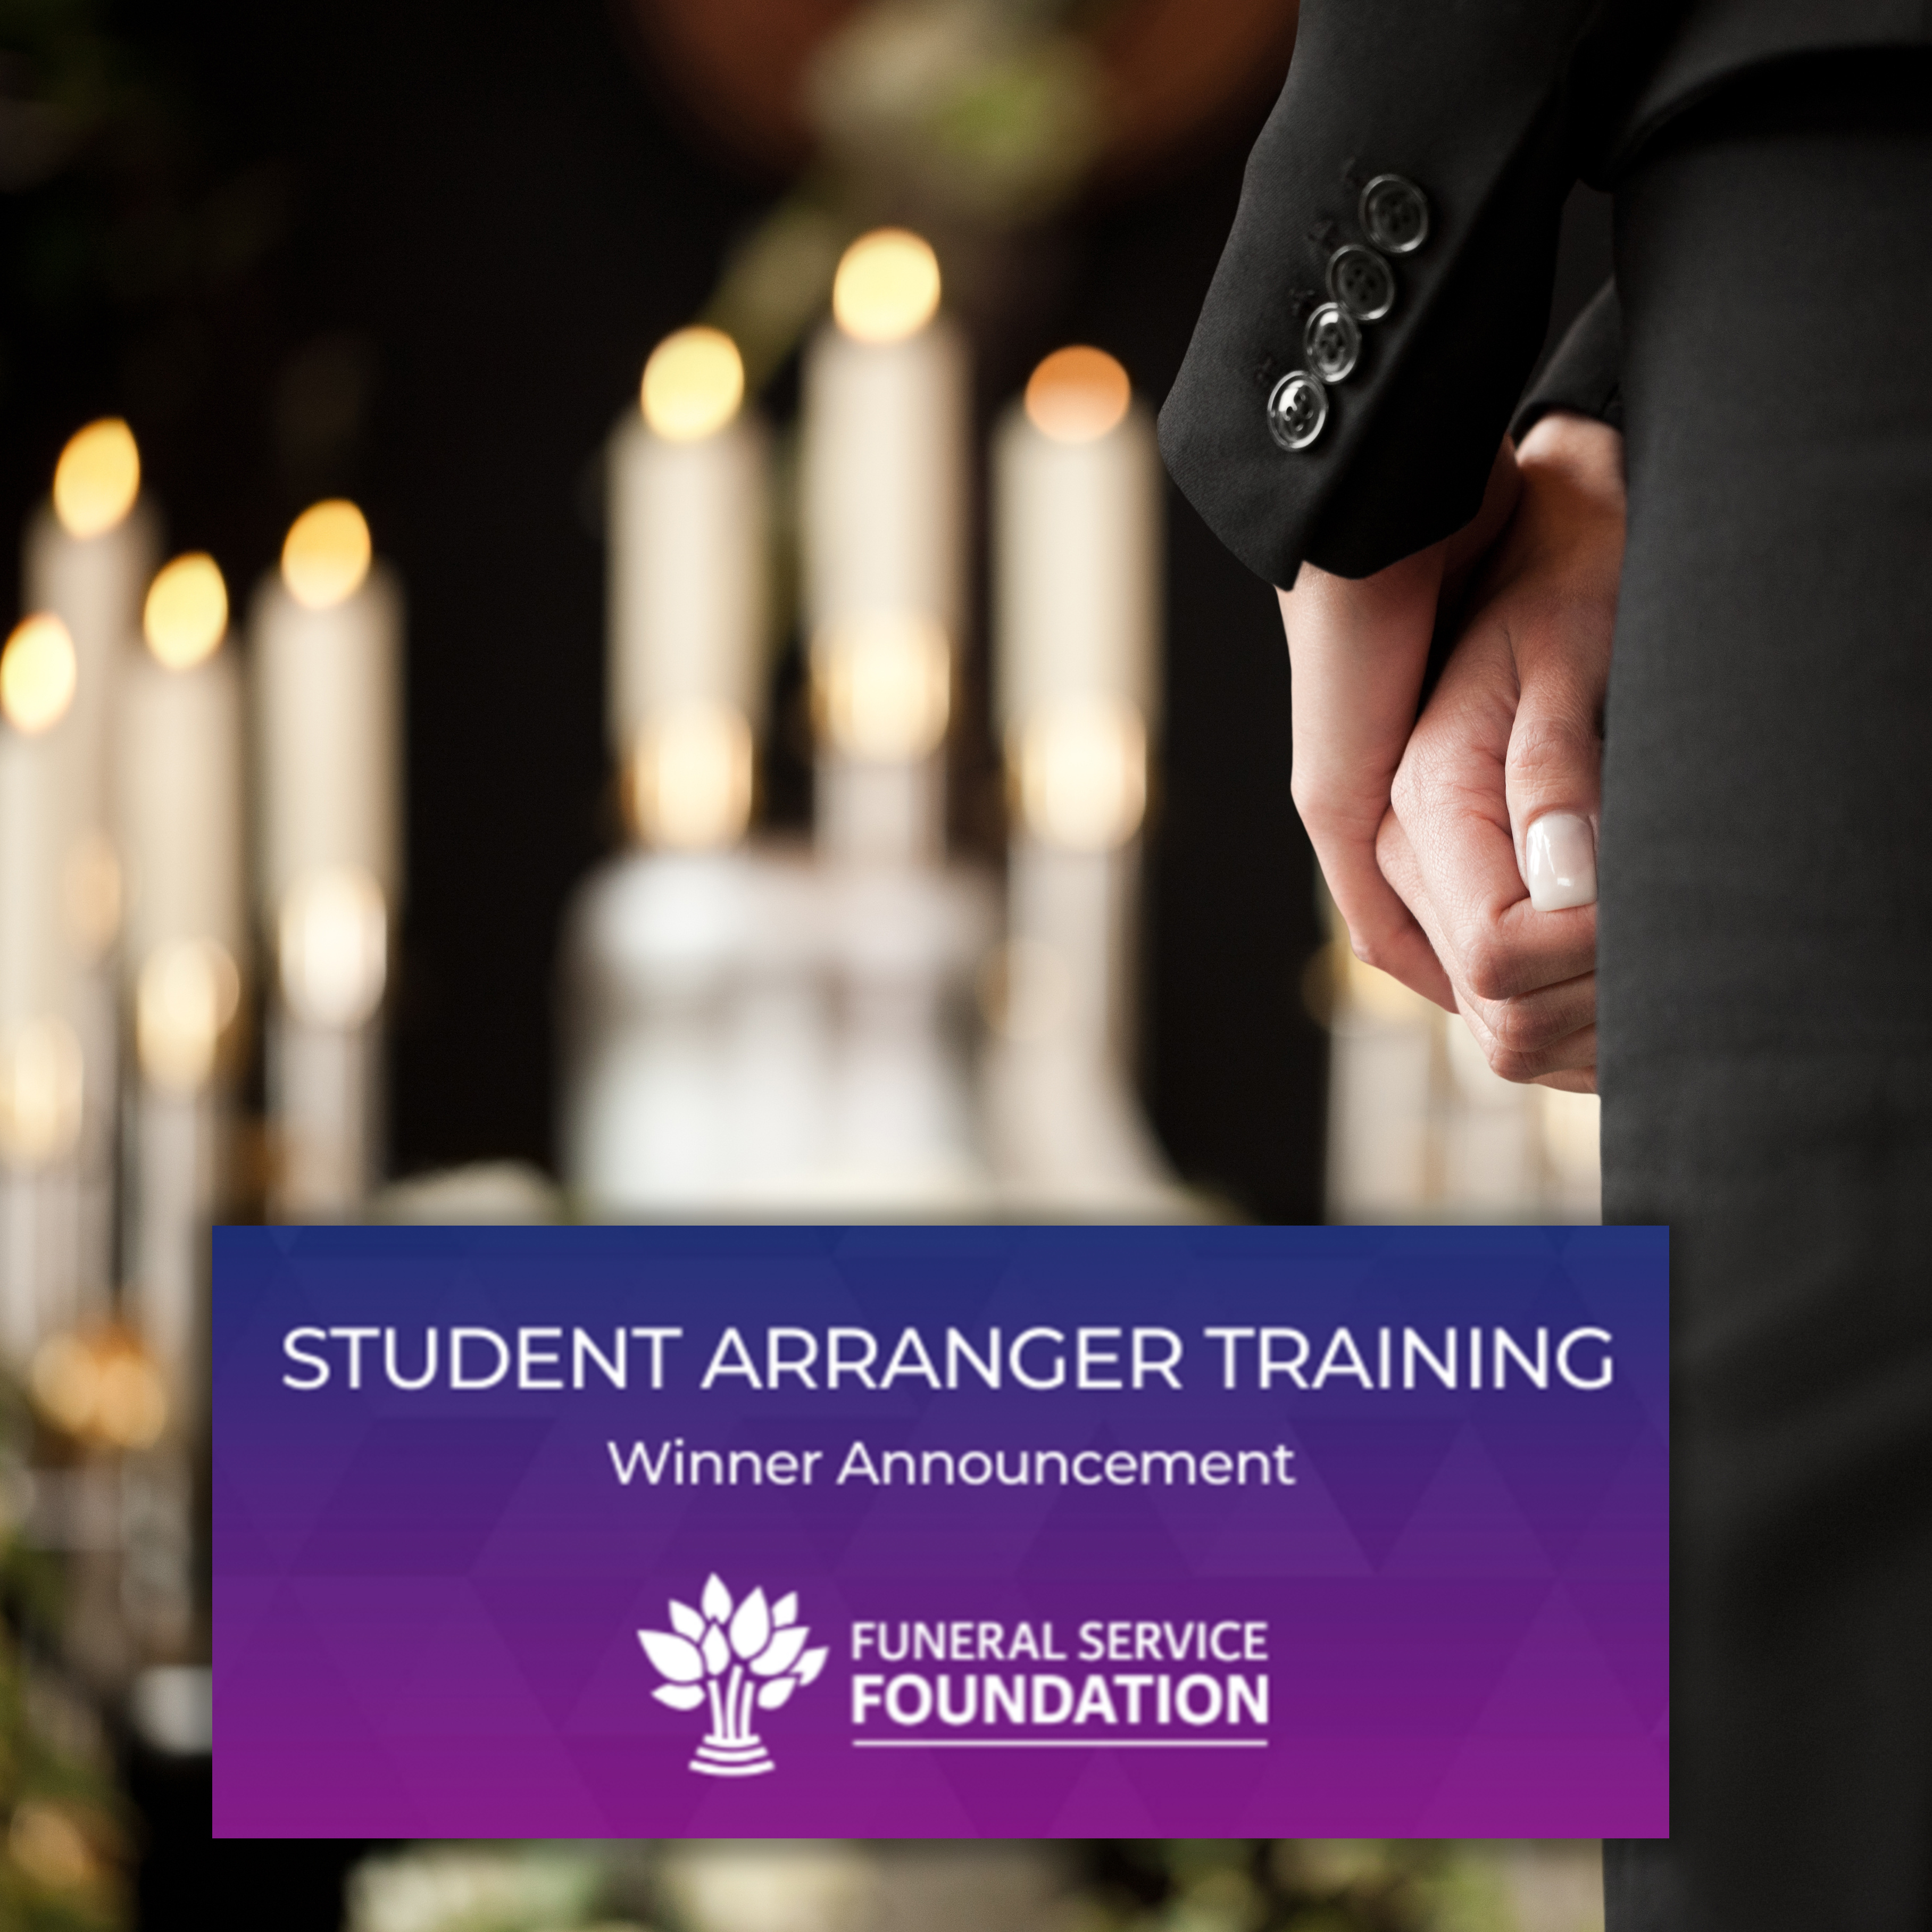 Student Arranger Training, Funeral Service Foundation